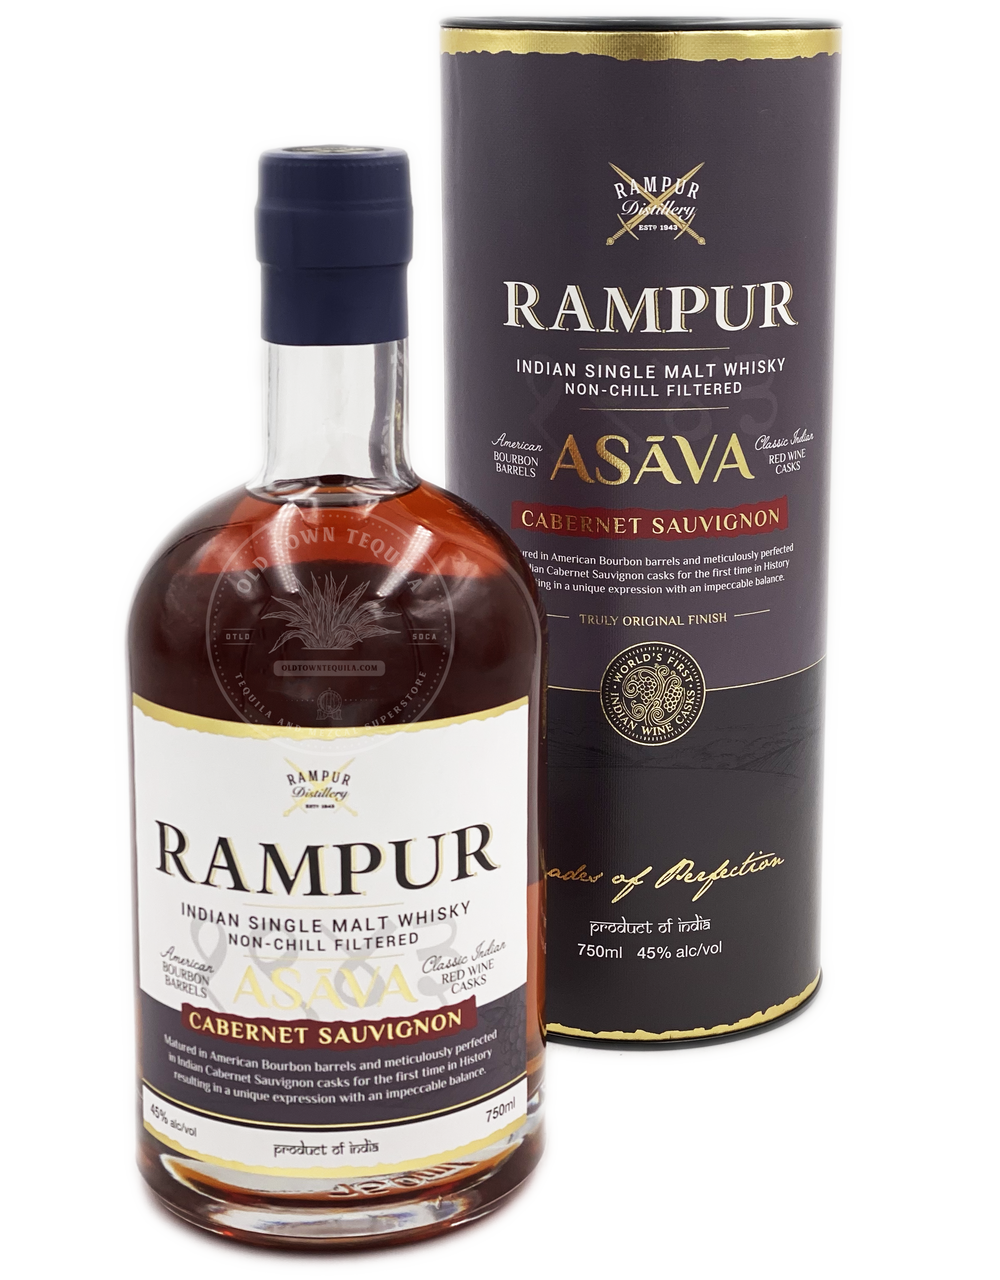 Rampur Asava Cabernet Sauvignon Indian Single Malt Whisky 750ml